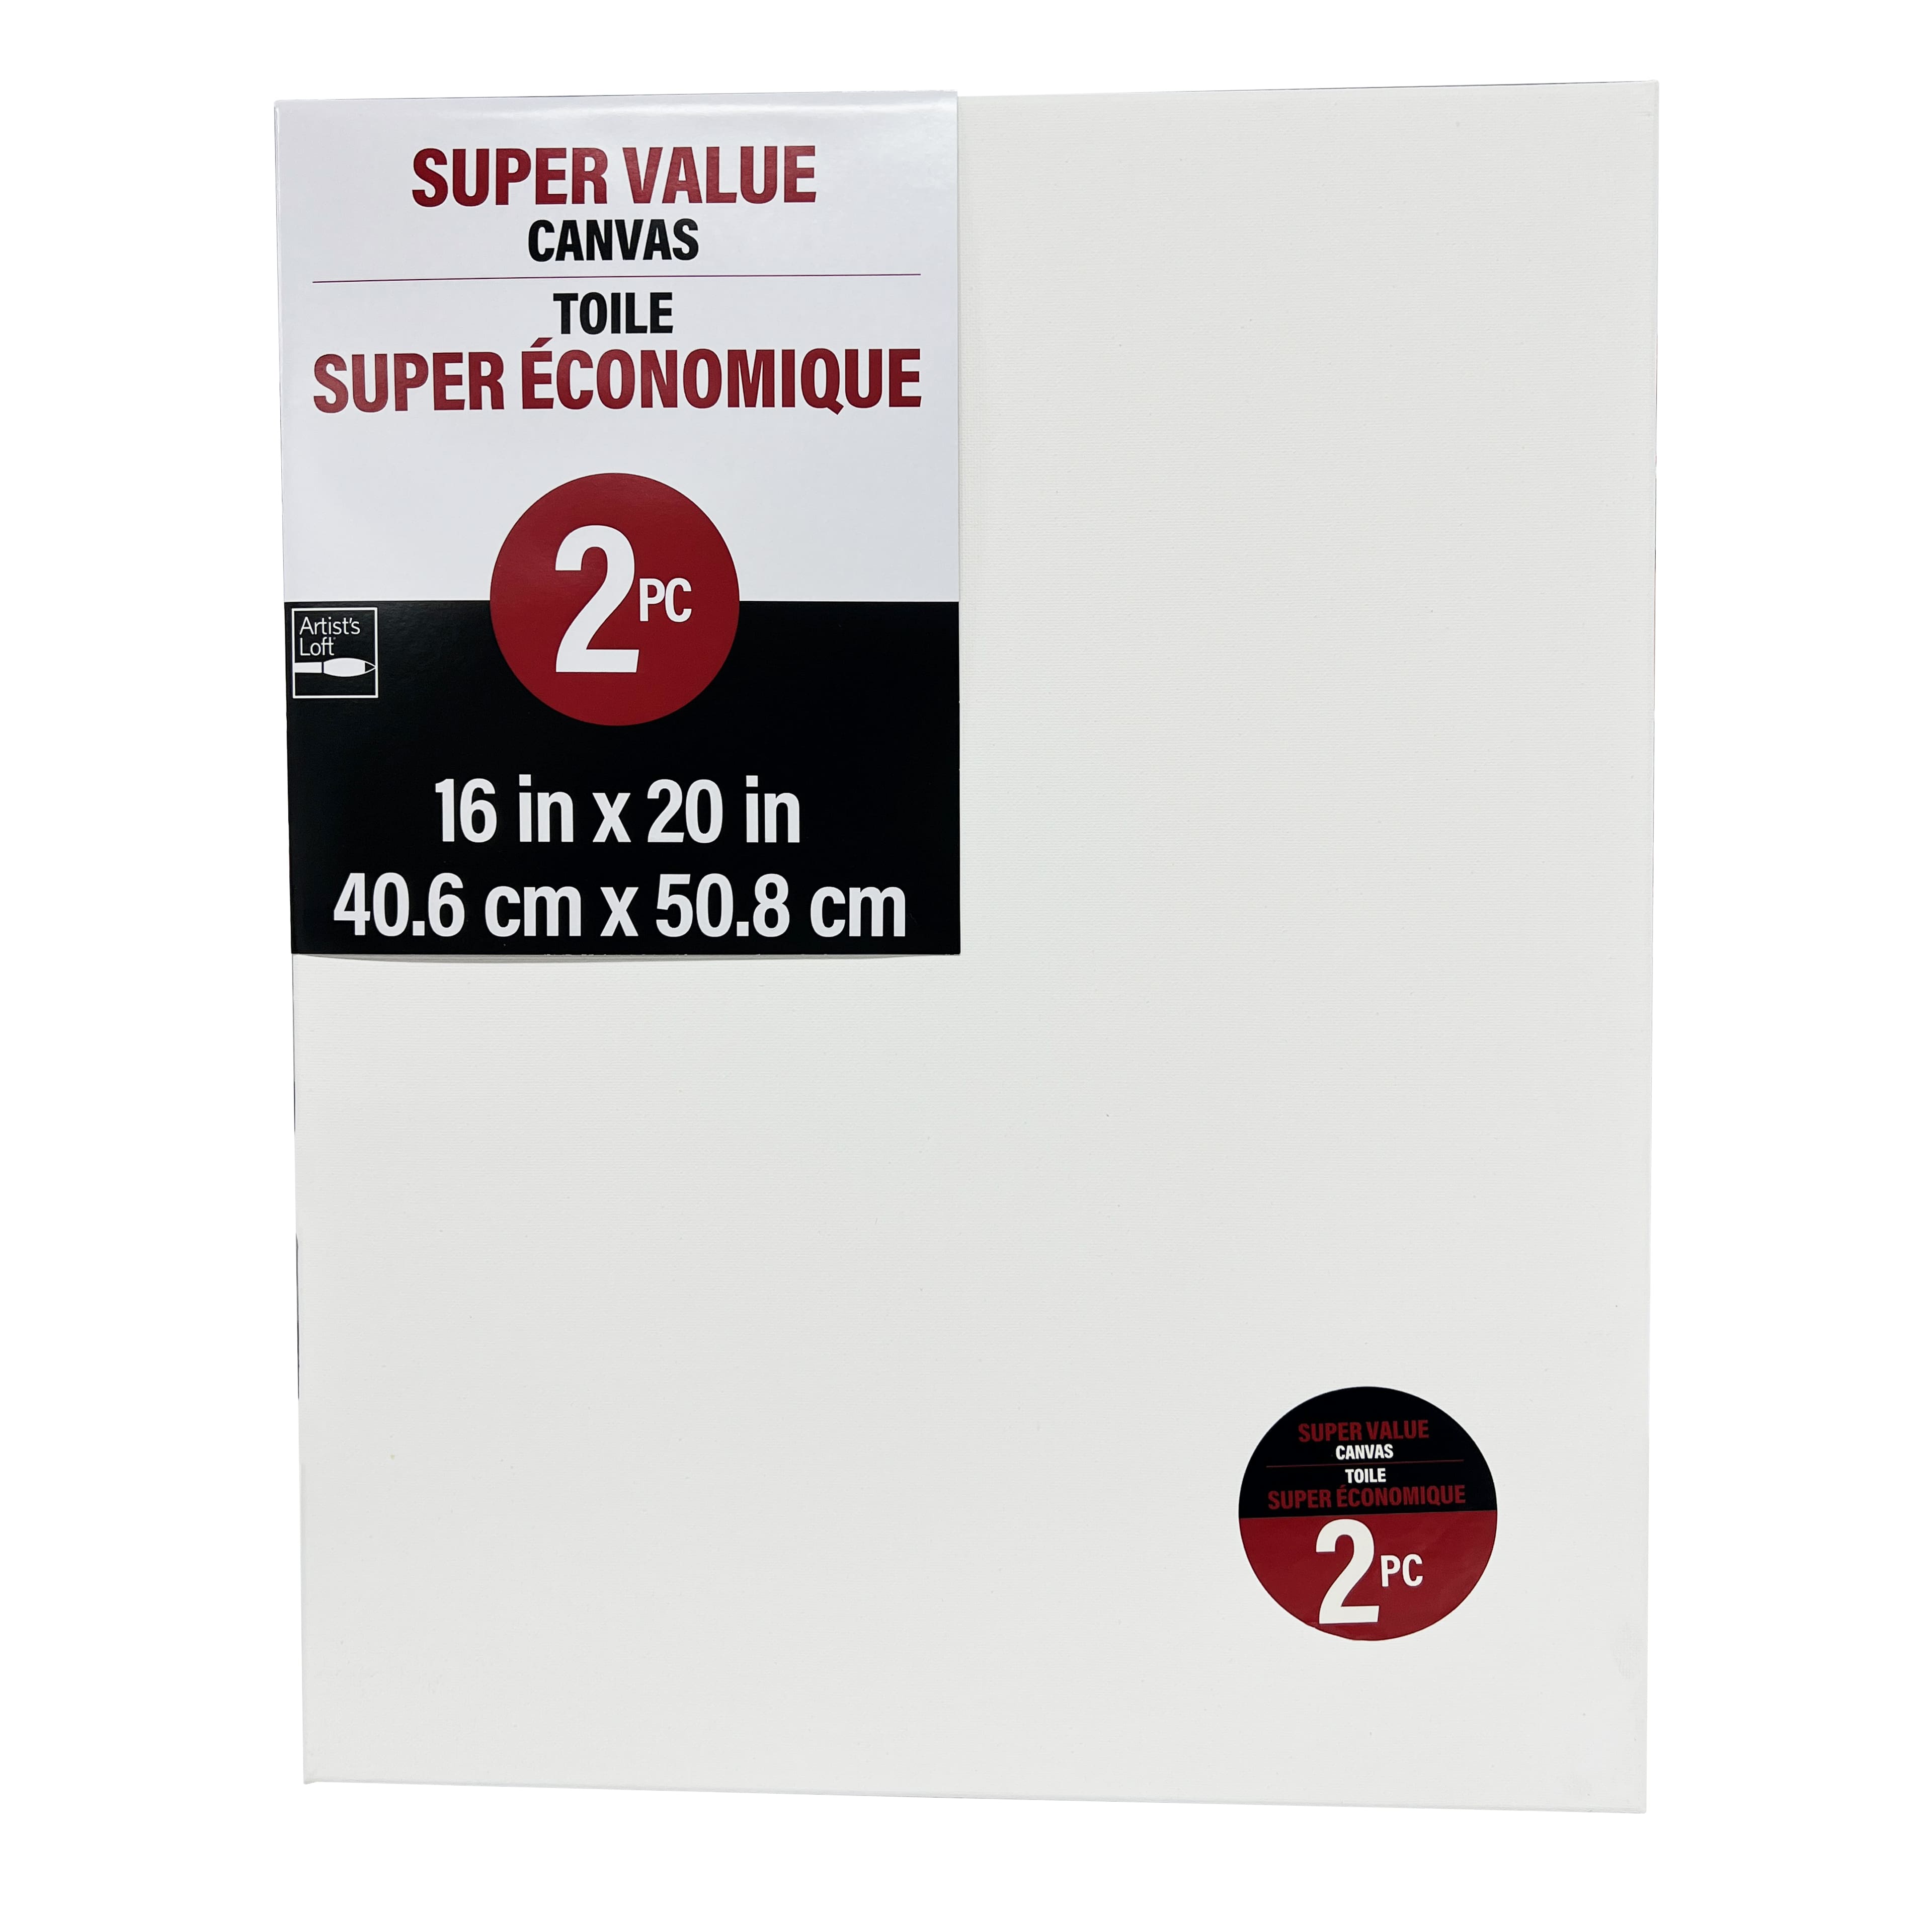 2 Pack Super Value&#xA0;Canvas by Artist&#x27;s Loft&#xAE;